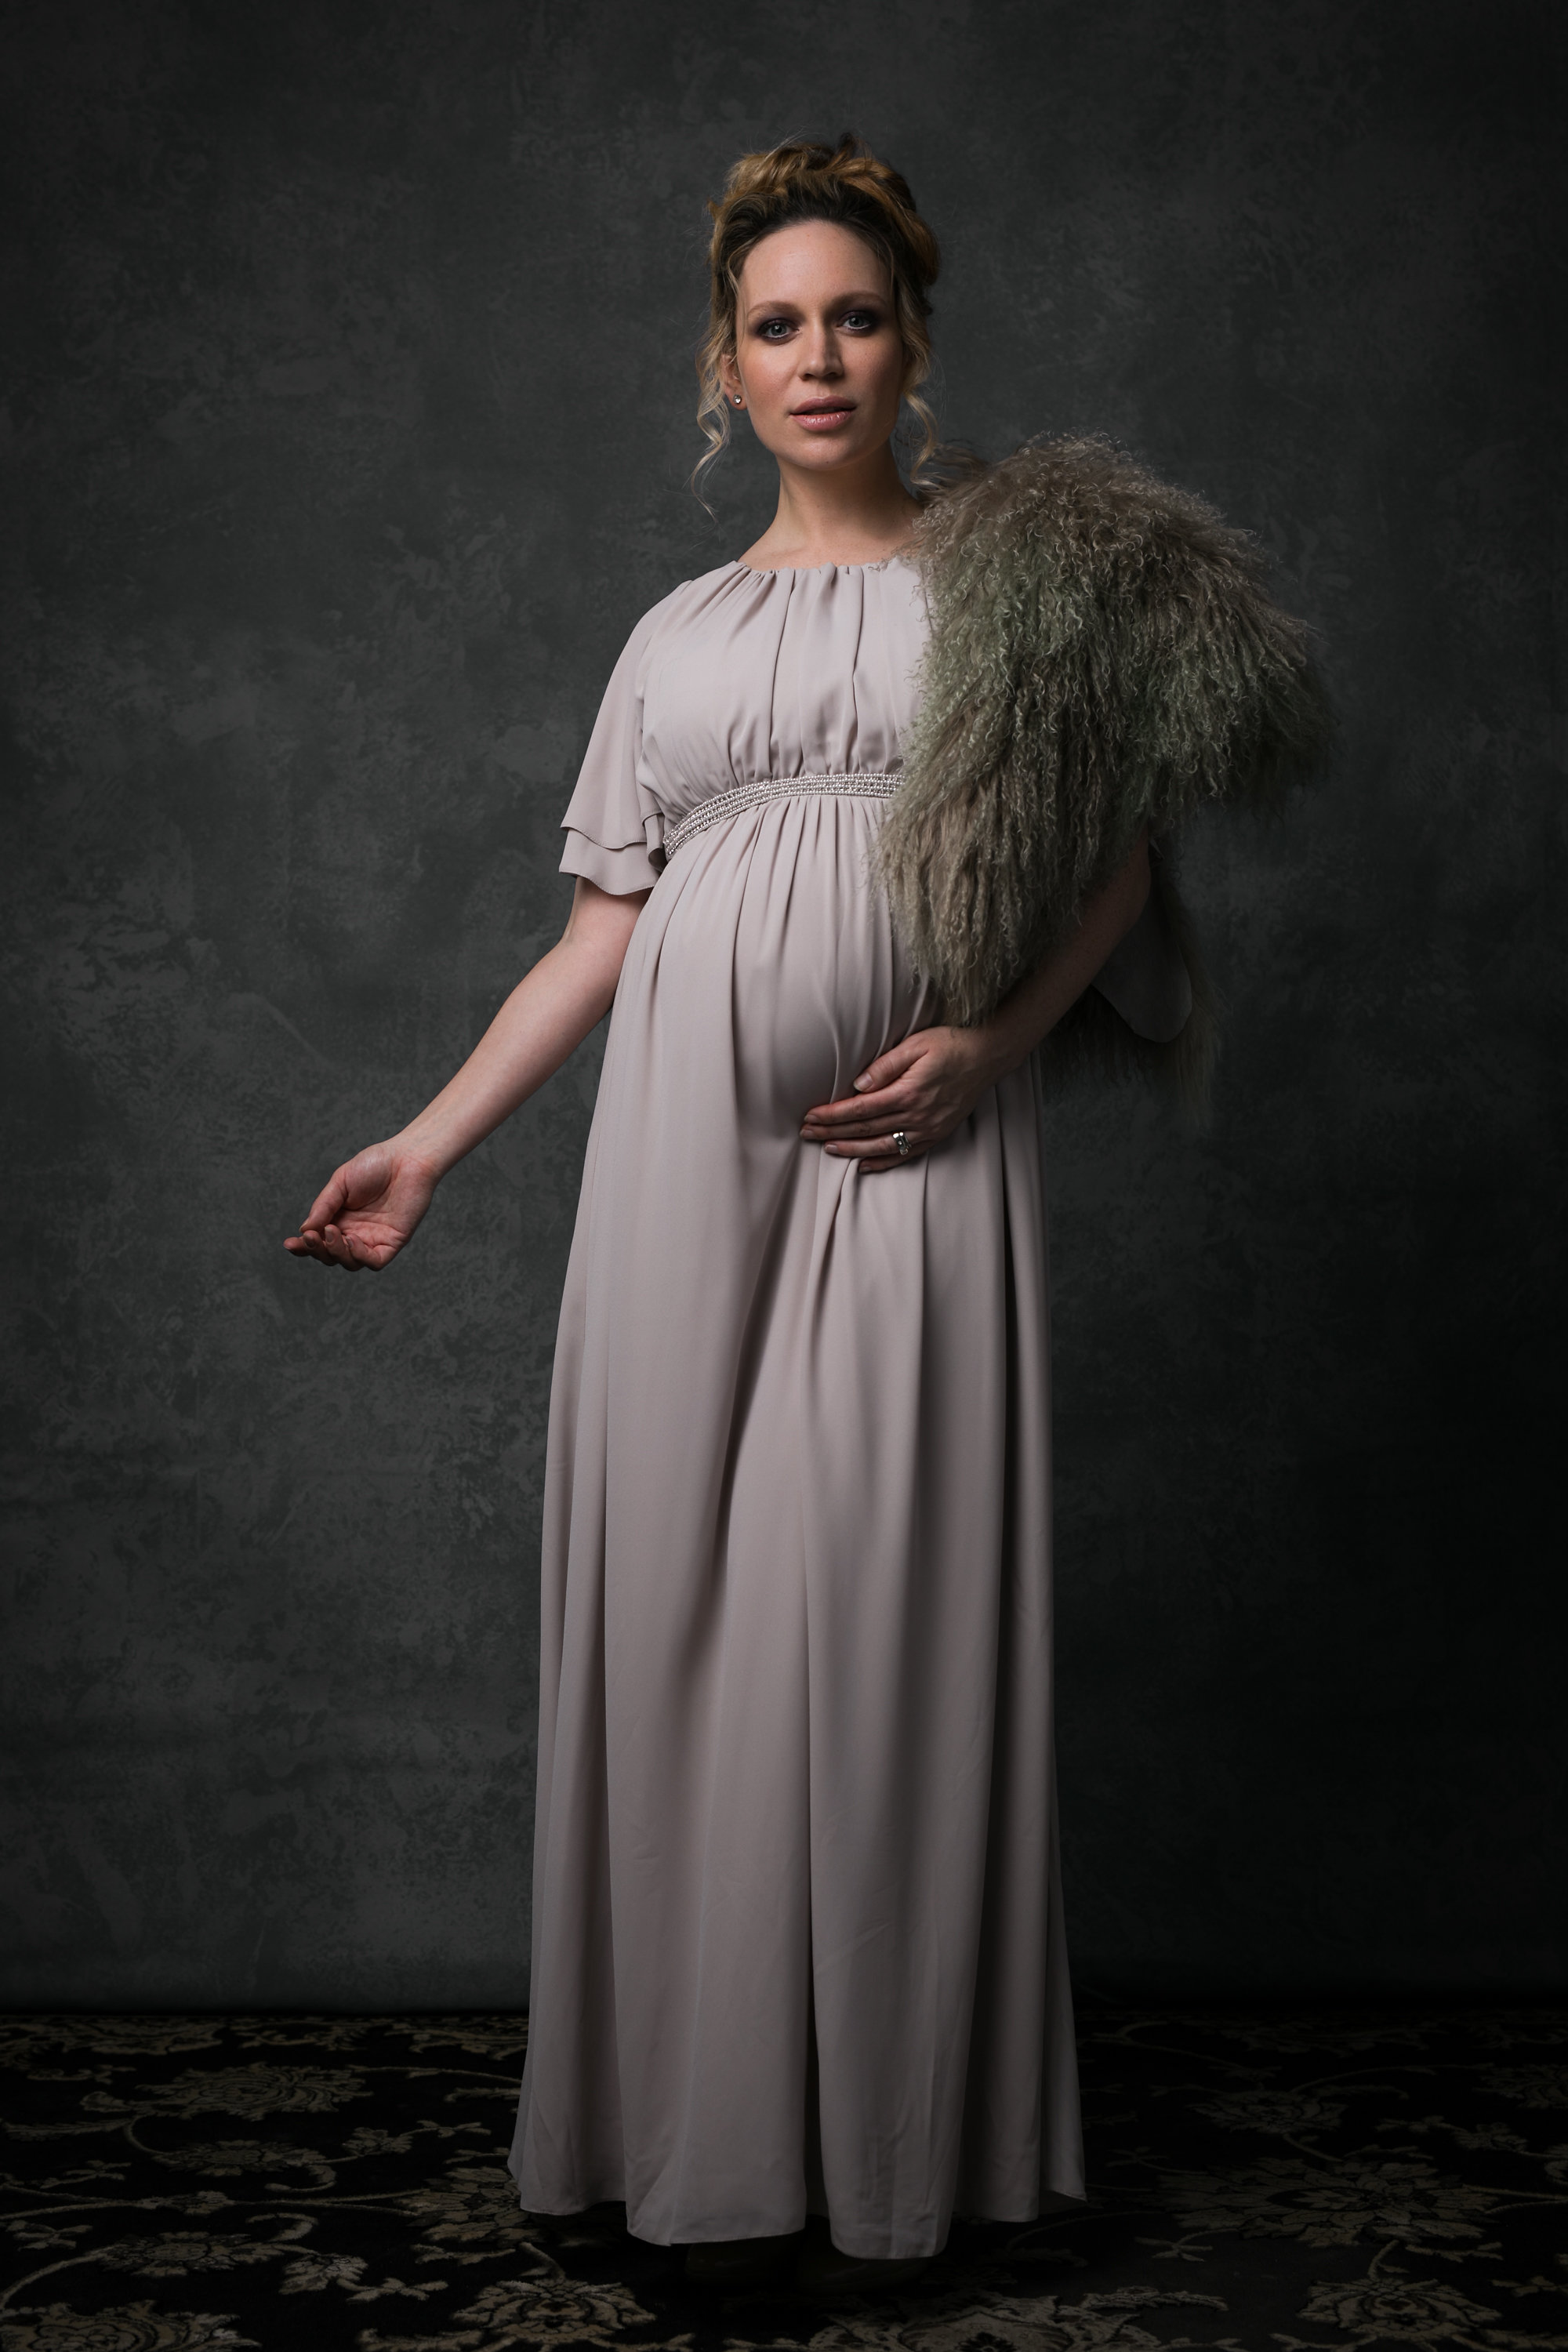 editorial maternity nicole romanoff photography 3.jpg